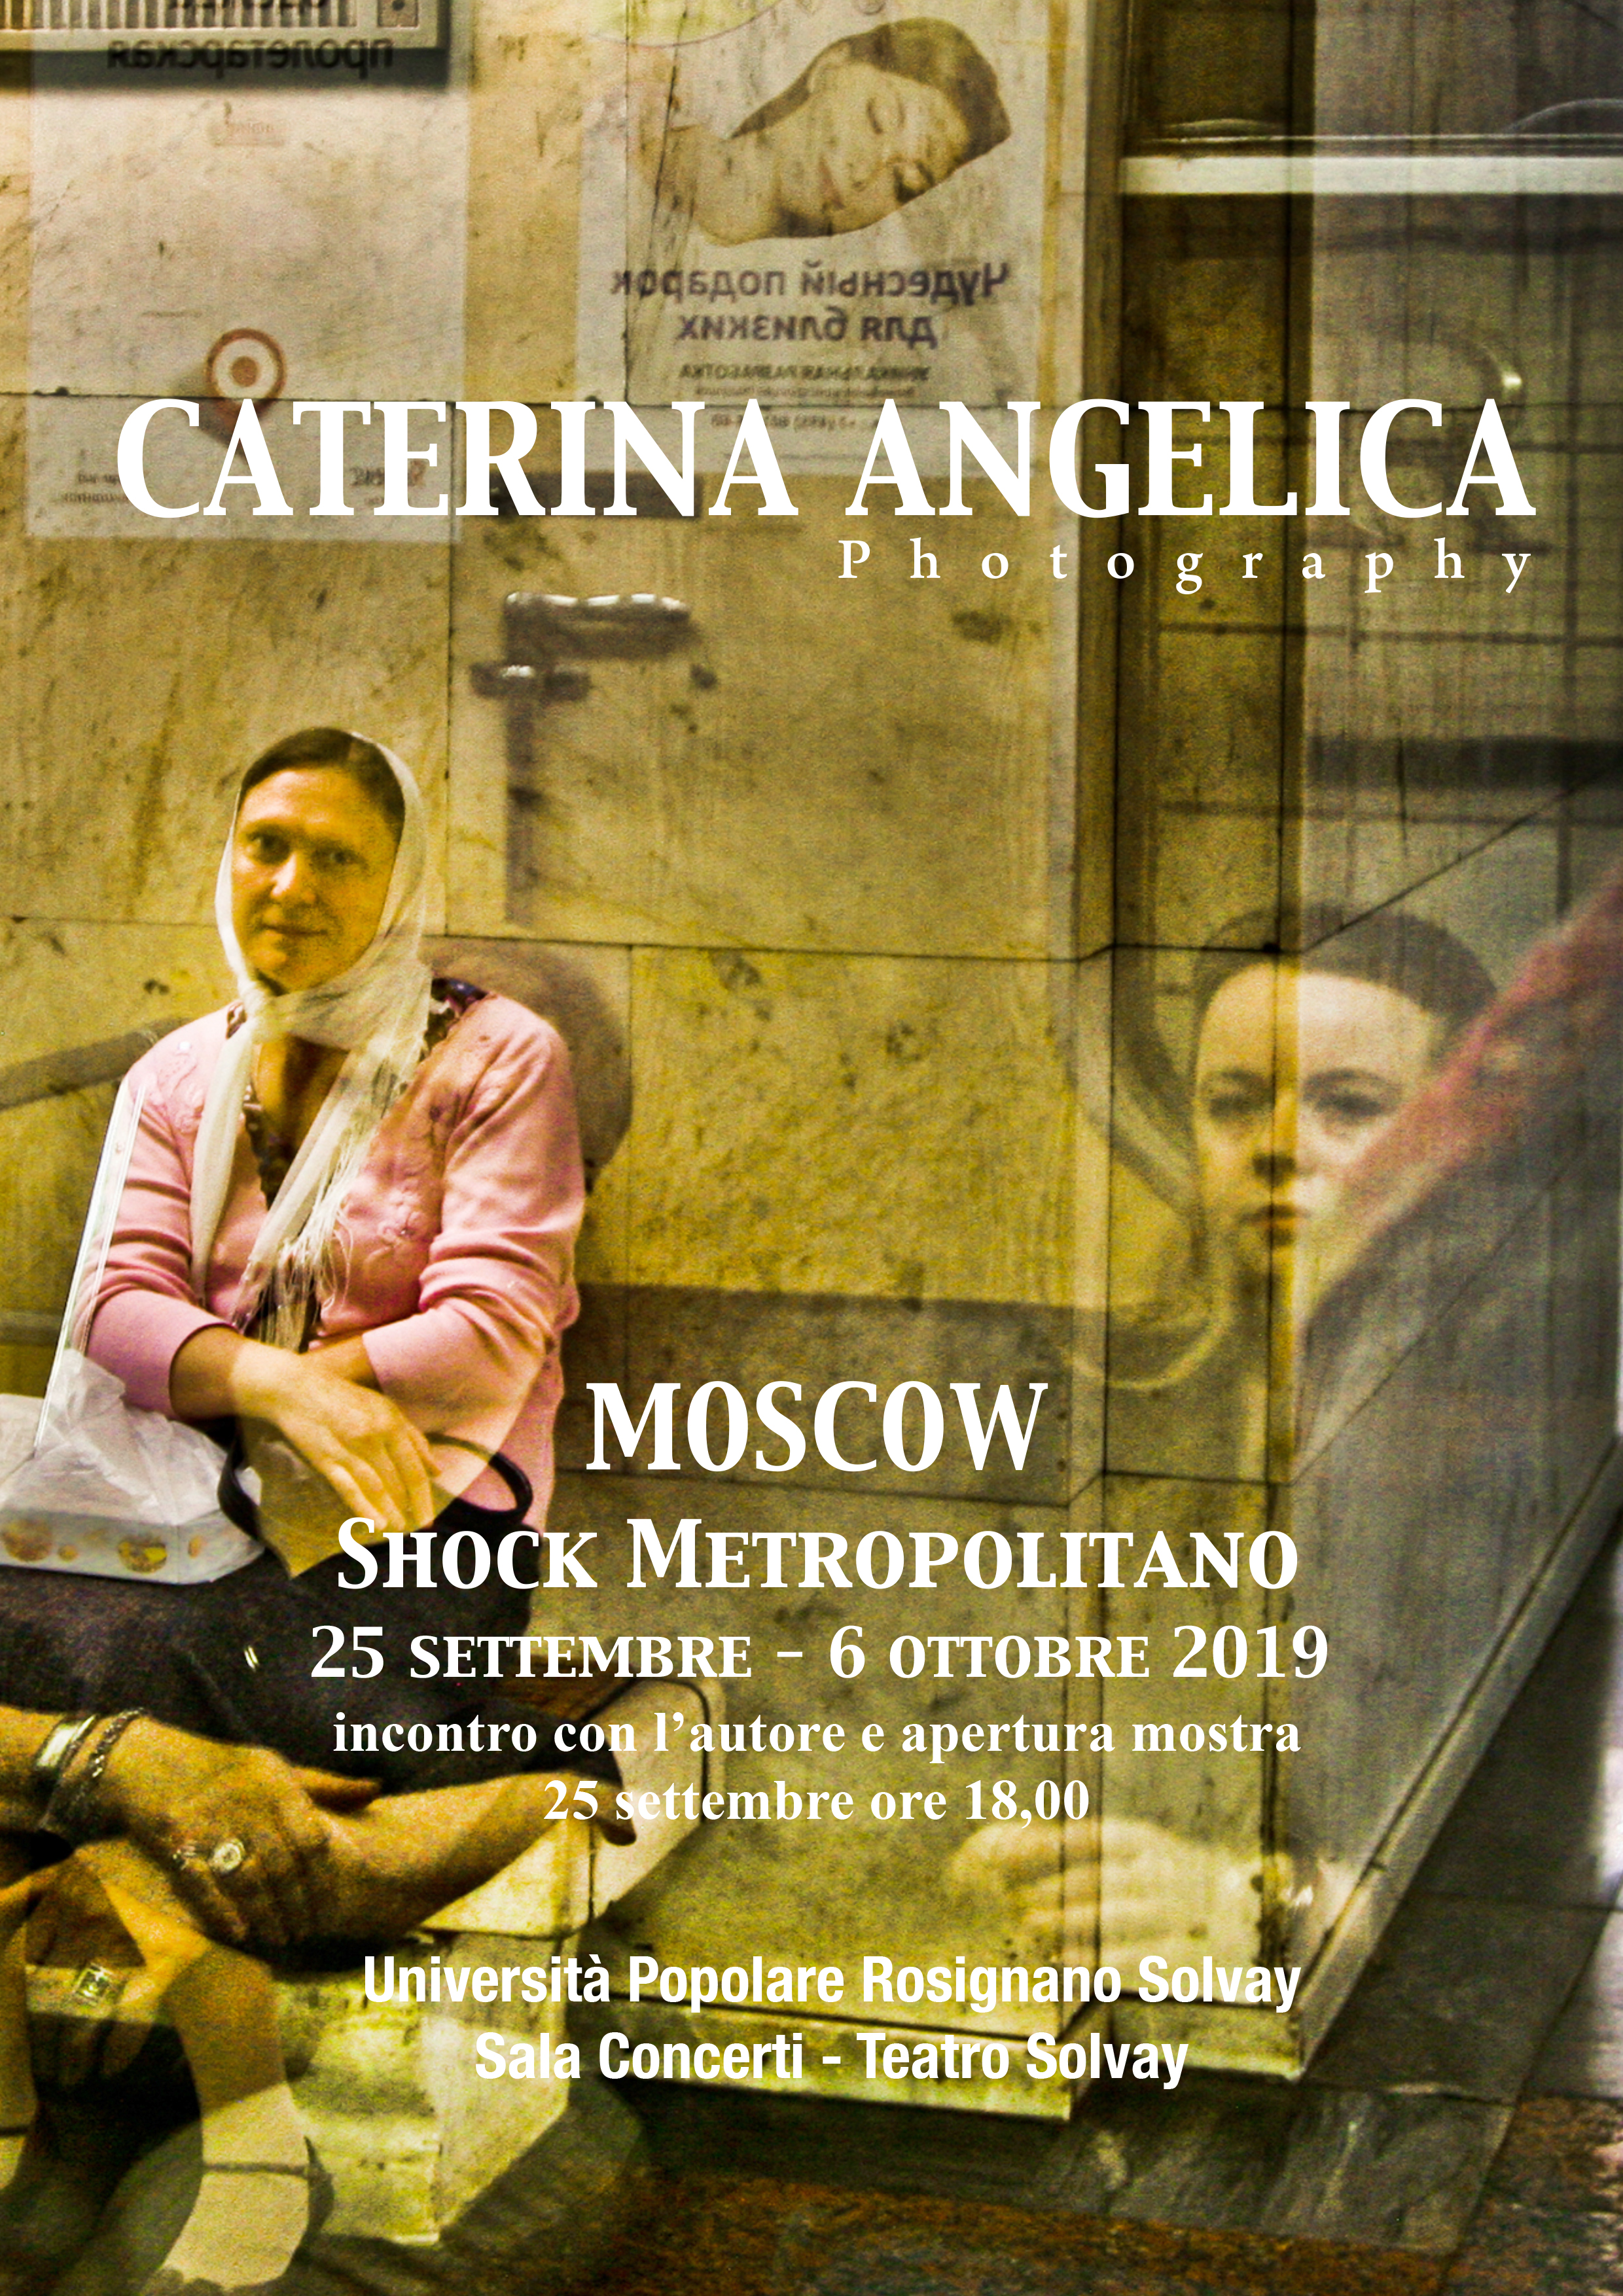 25/9-6/10 Mostra “Moscow” shock metropolitano di Caterina Angelica